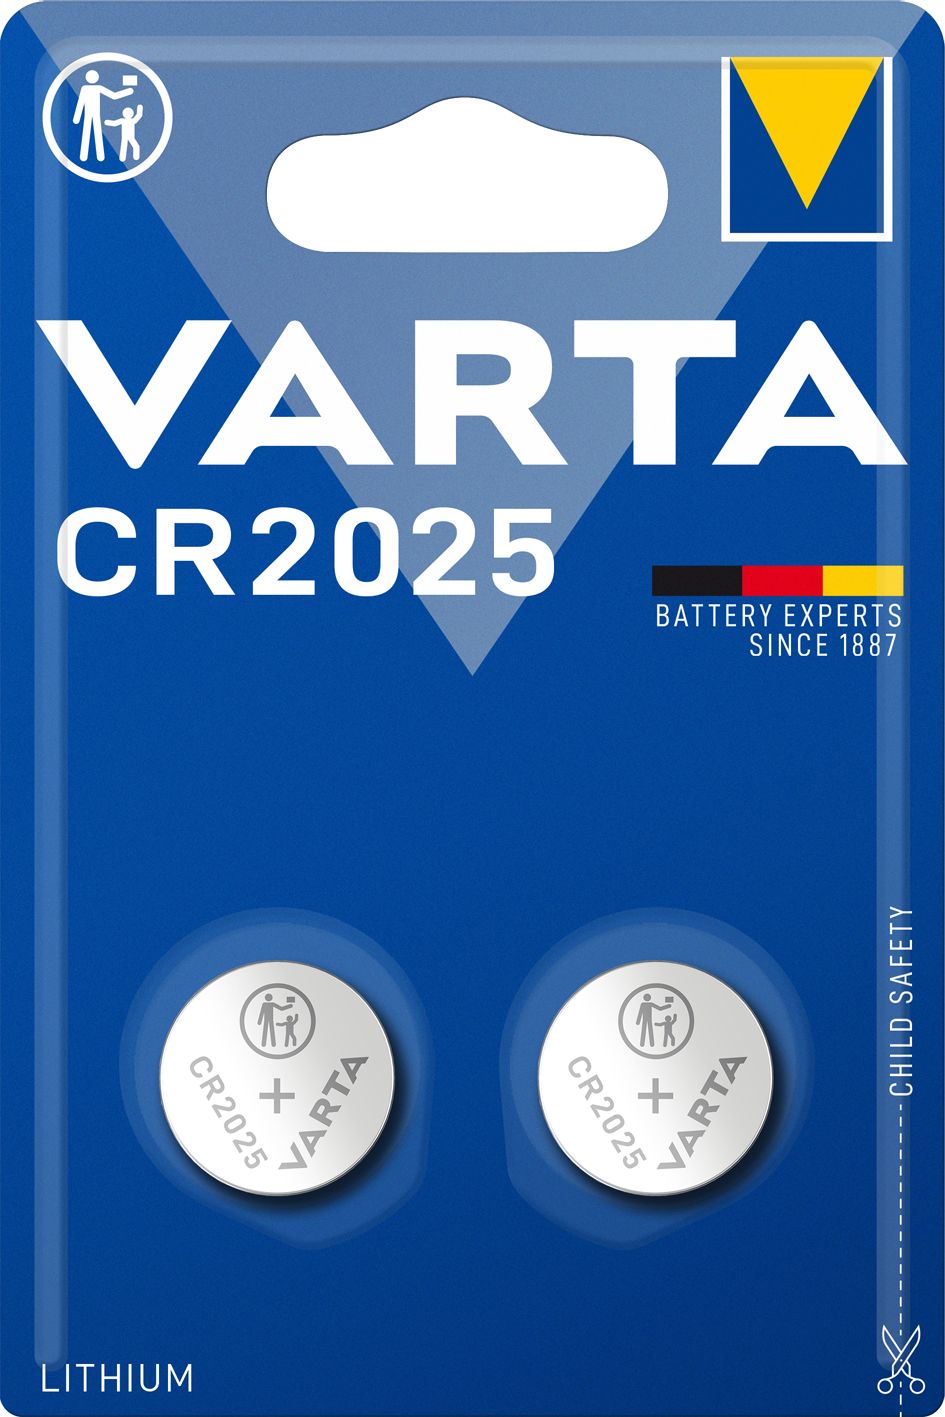 VARTA CR2025 - 2 piles boutons - 3V